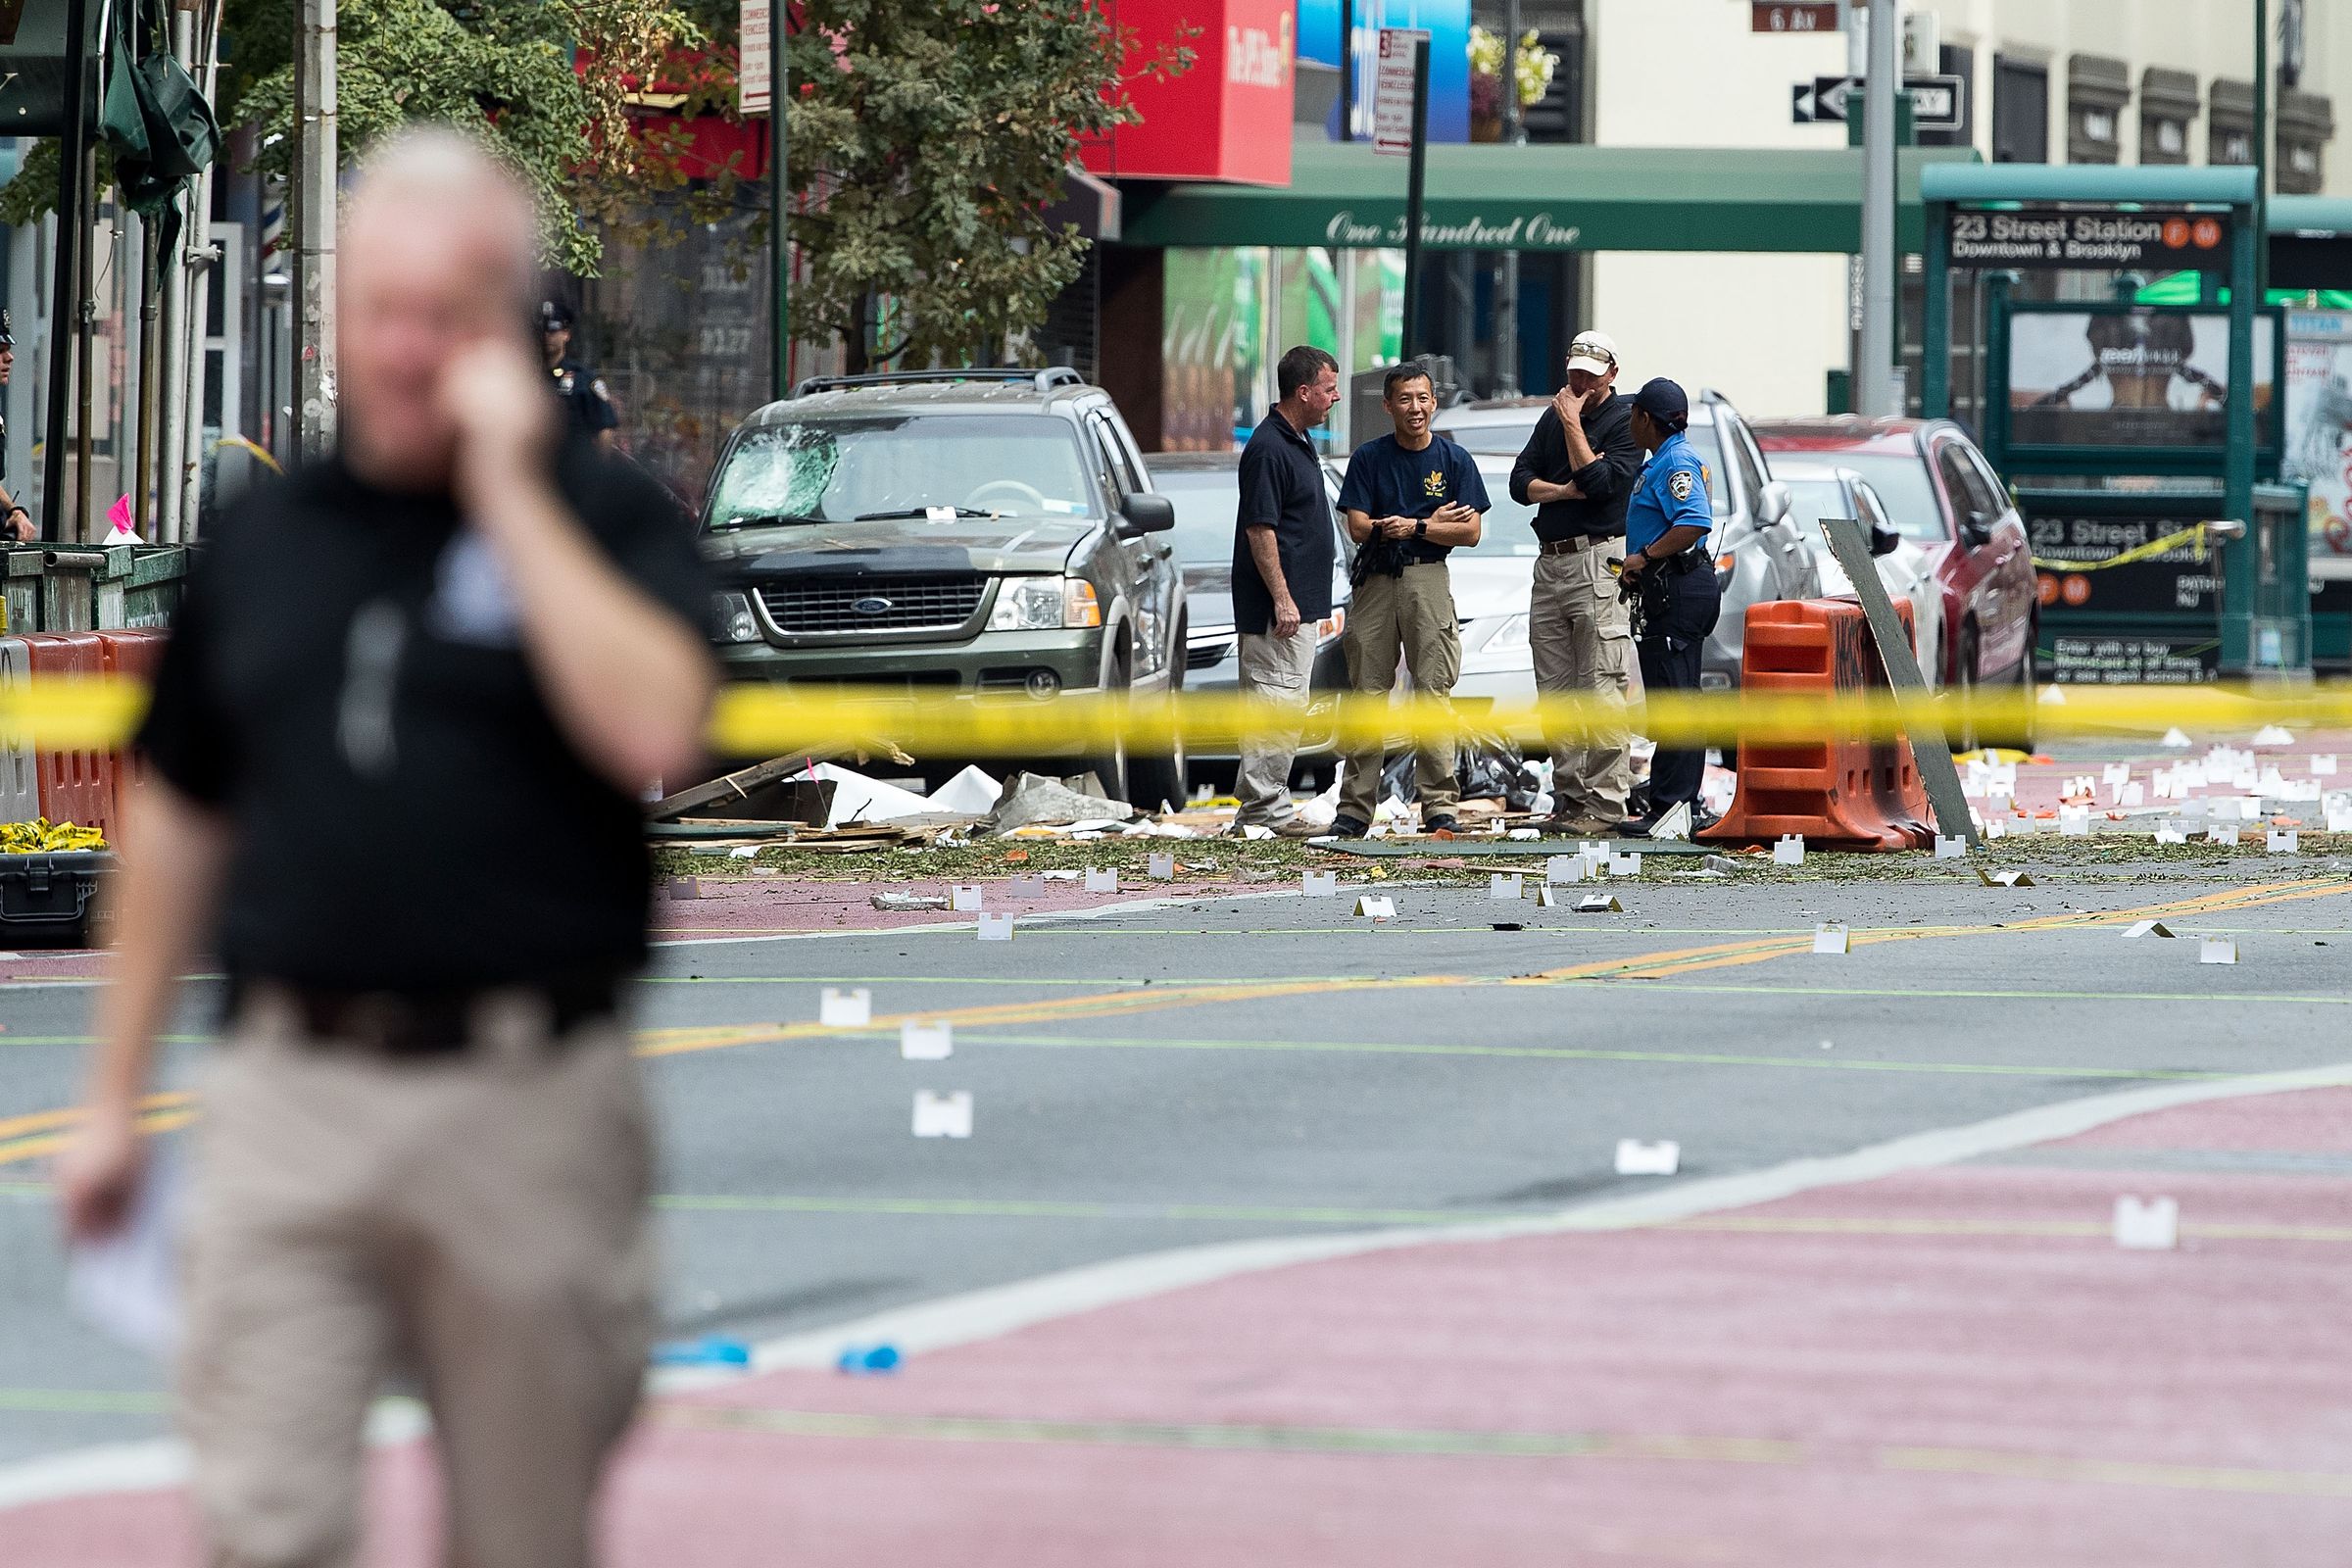 Explosion In Chelsea Neighborhood of New York City Injures 29